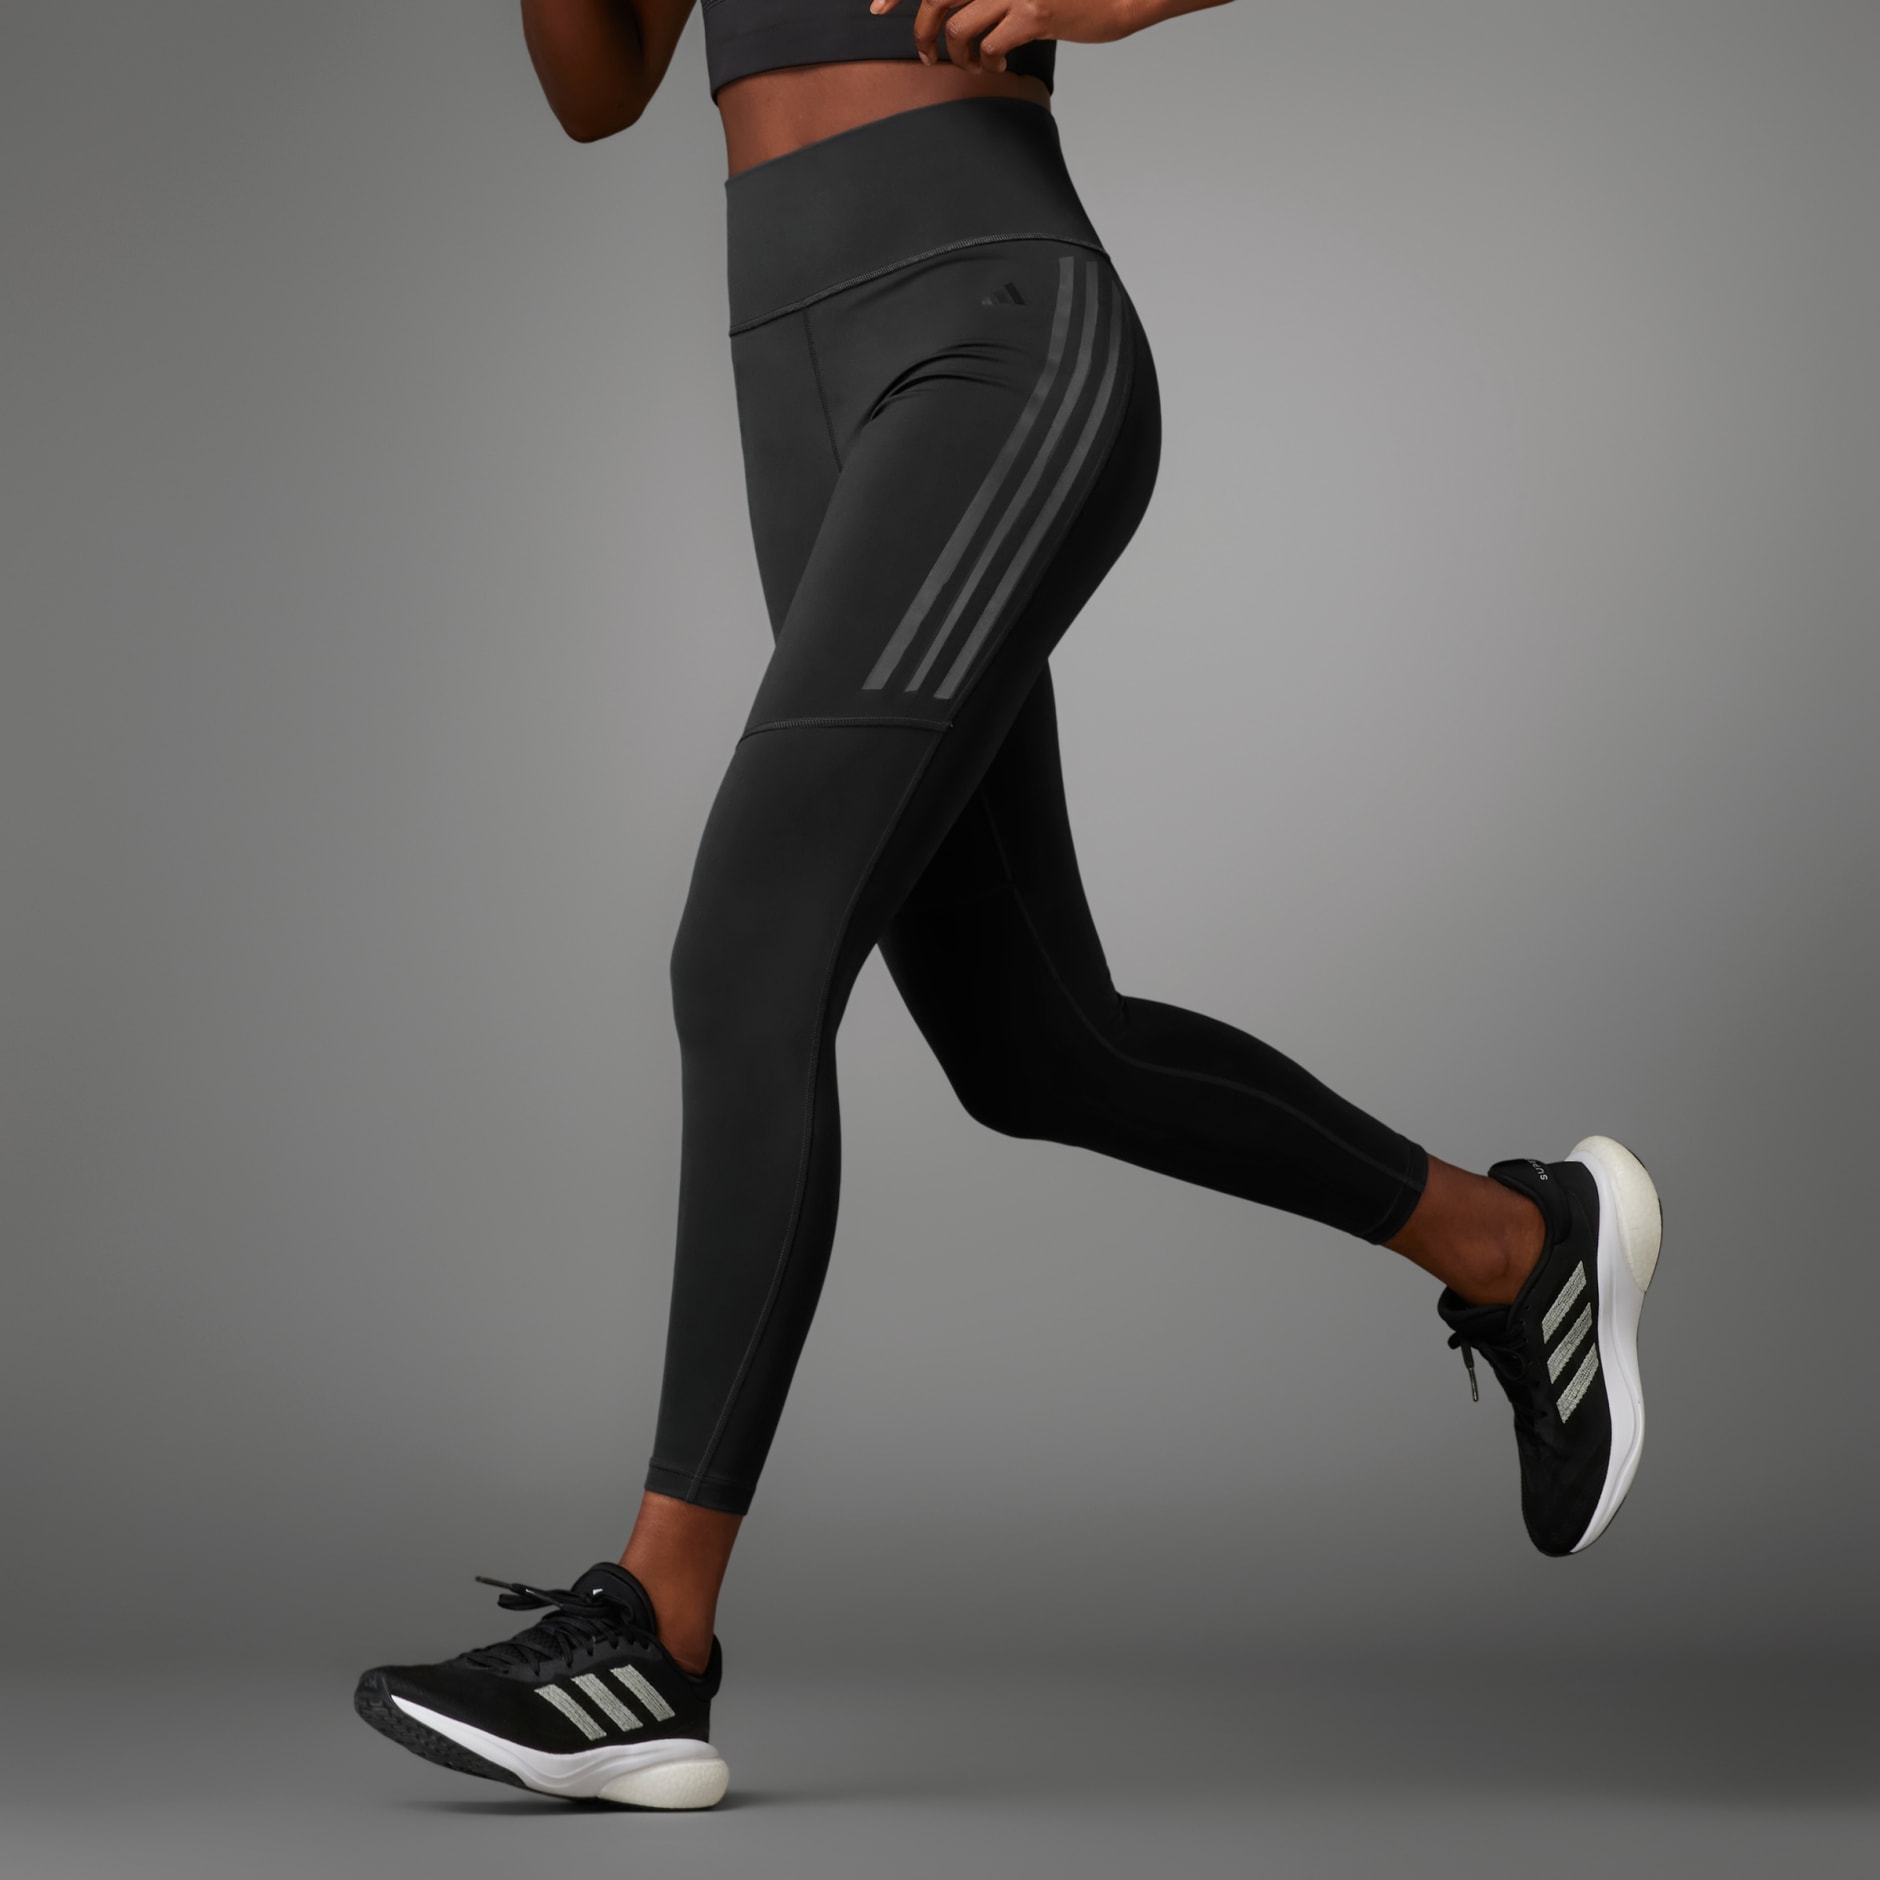 adidas Training alphaskin leggings with 3 stripes in black